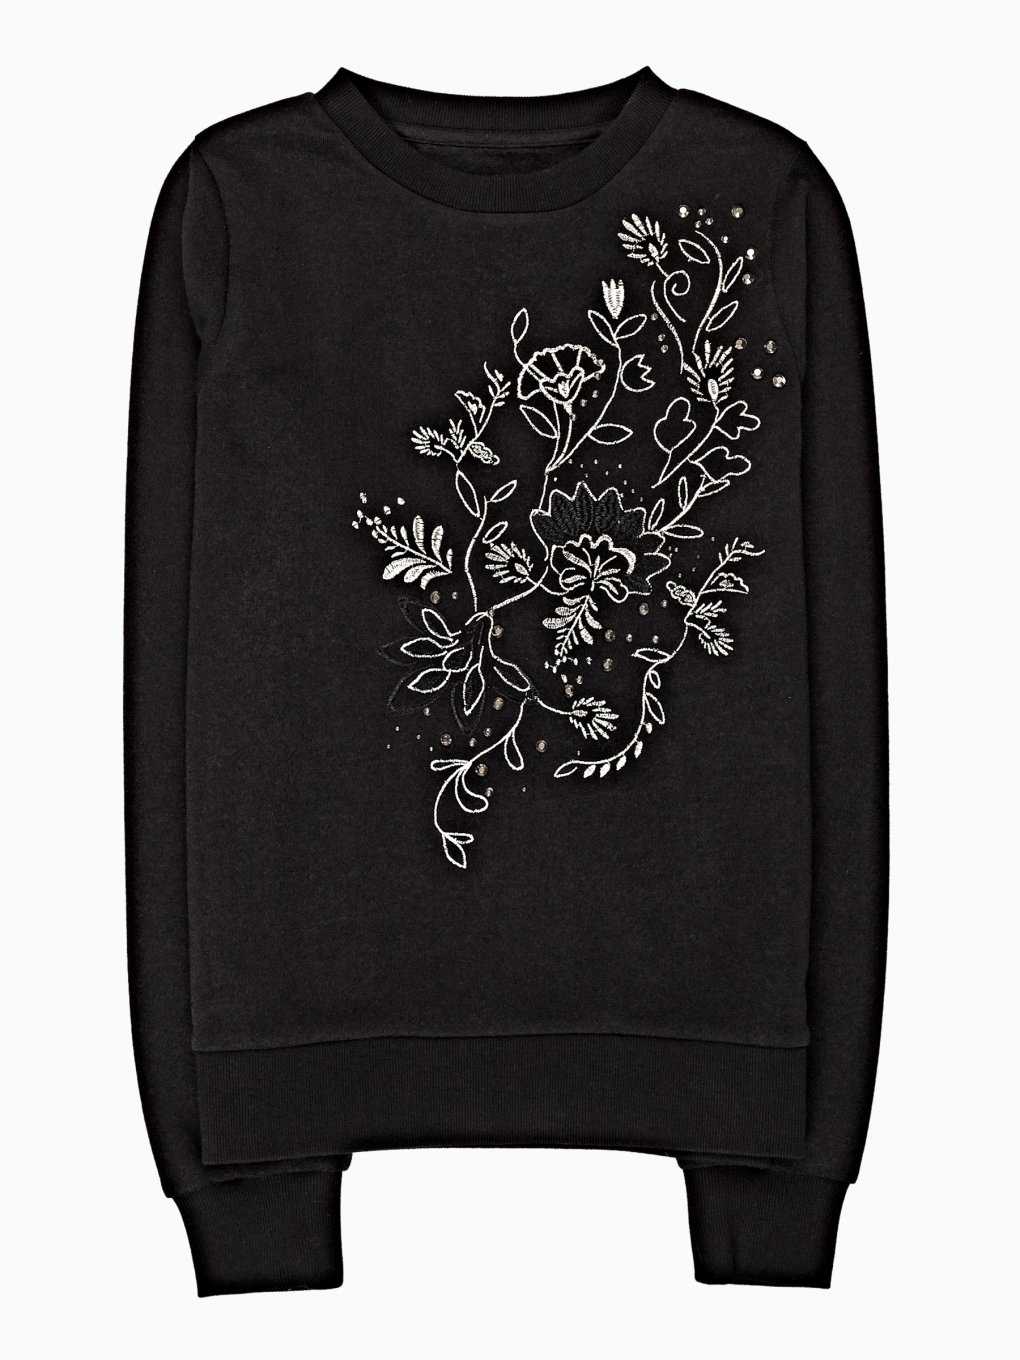 Embroidered sweatshirt with stones